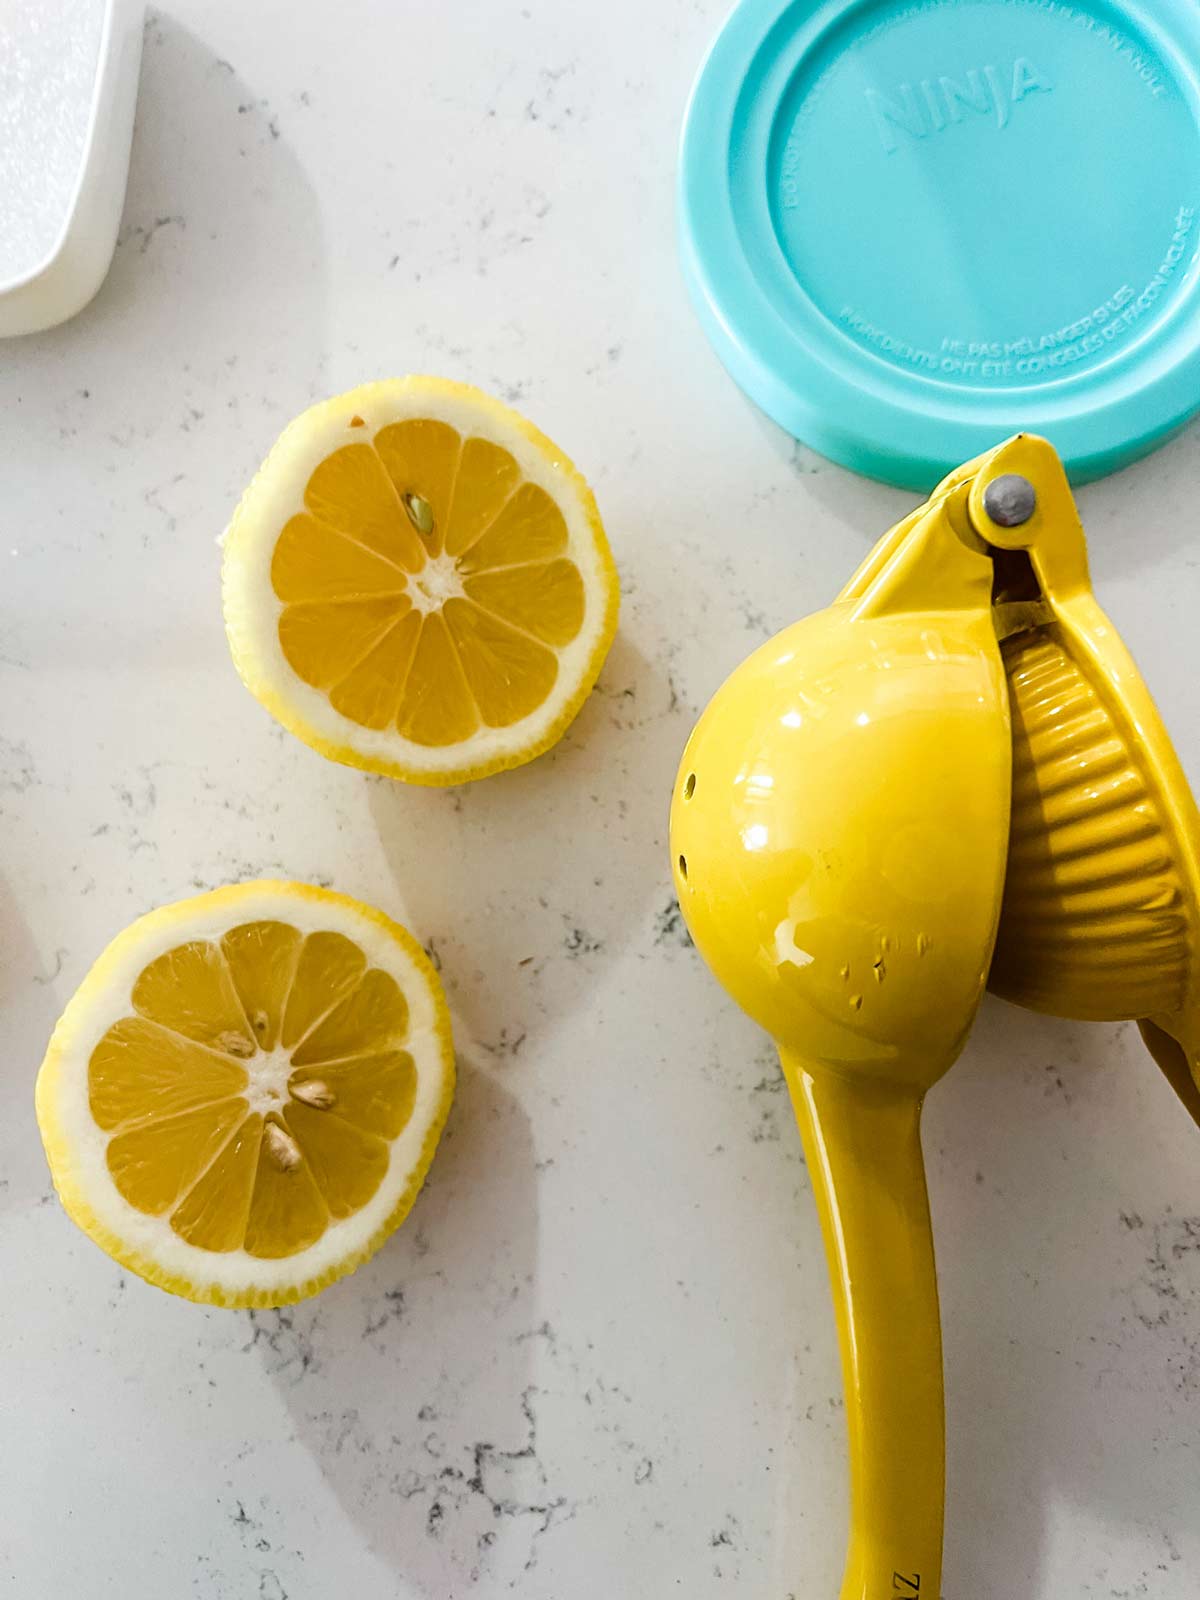 A halved lemon sitting next to a lemon juicer.